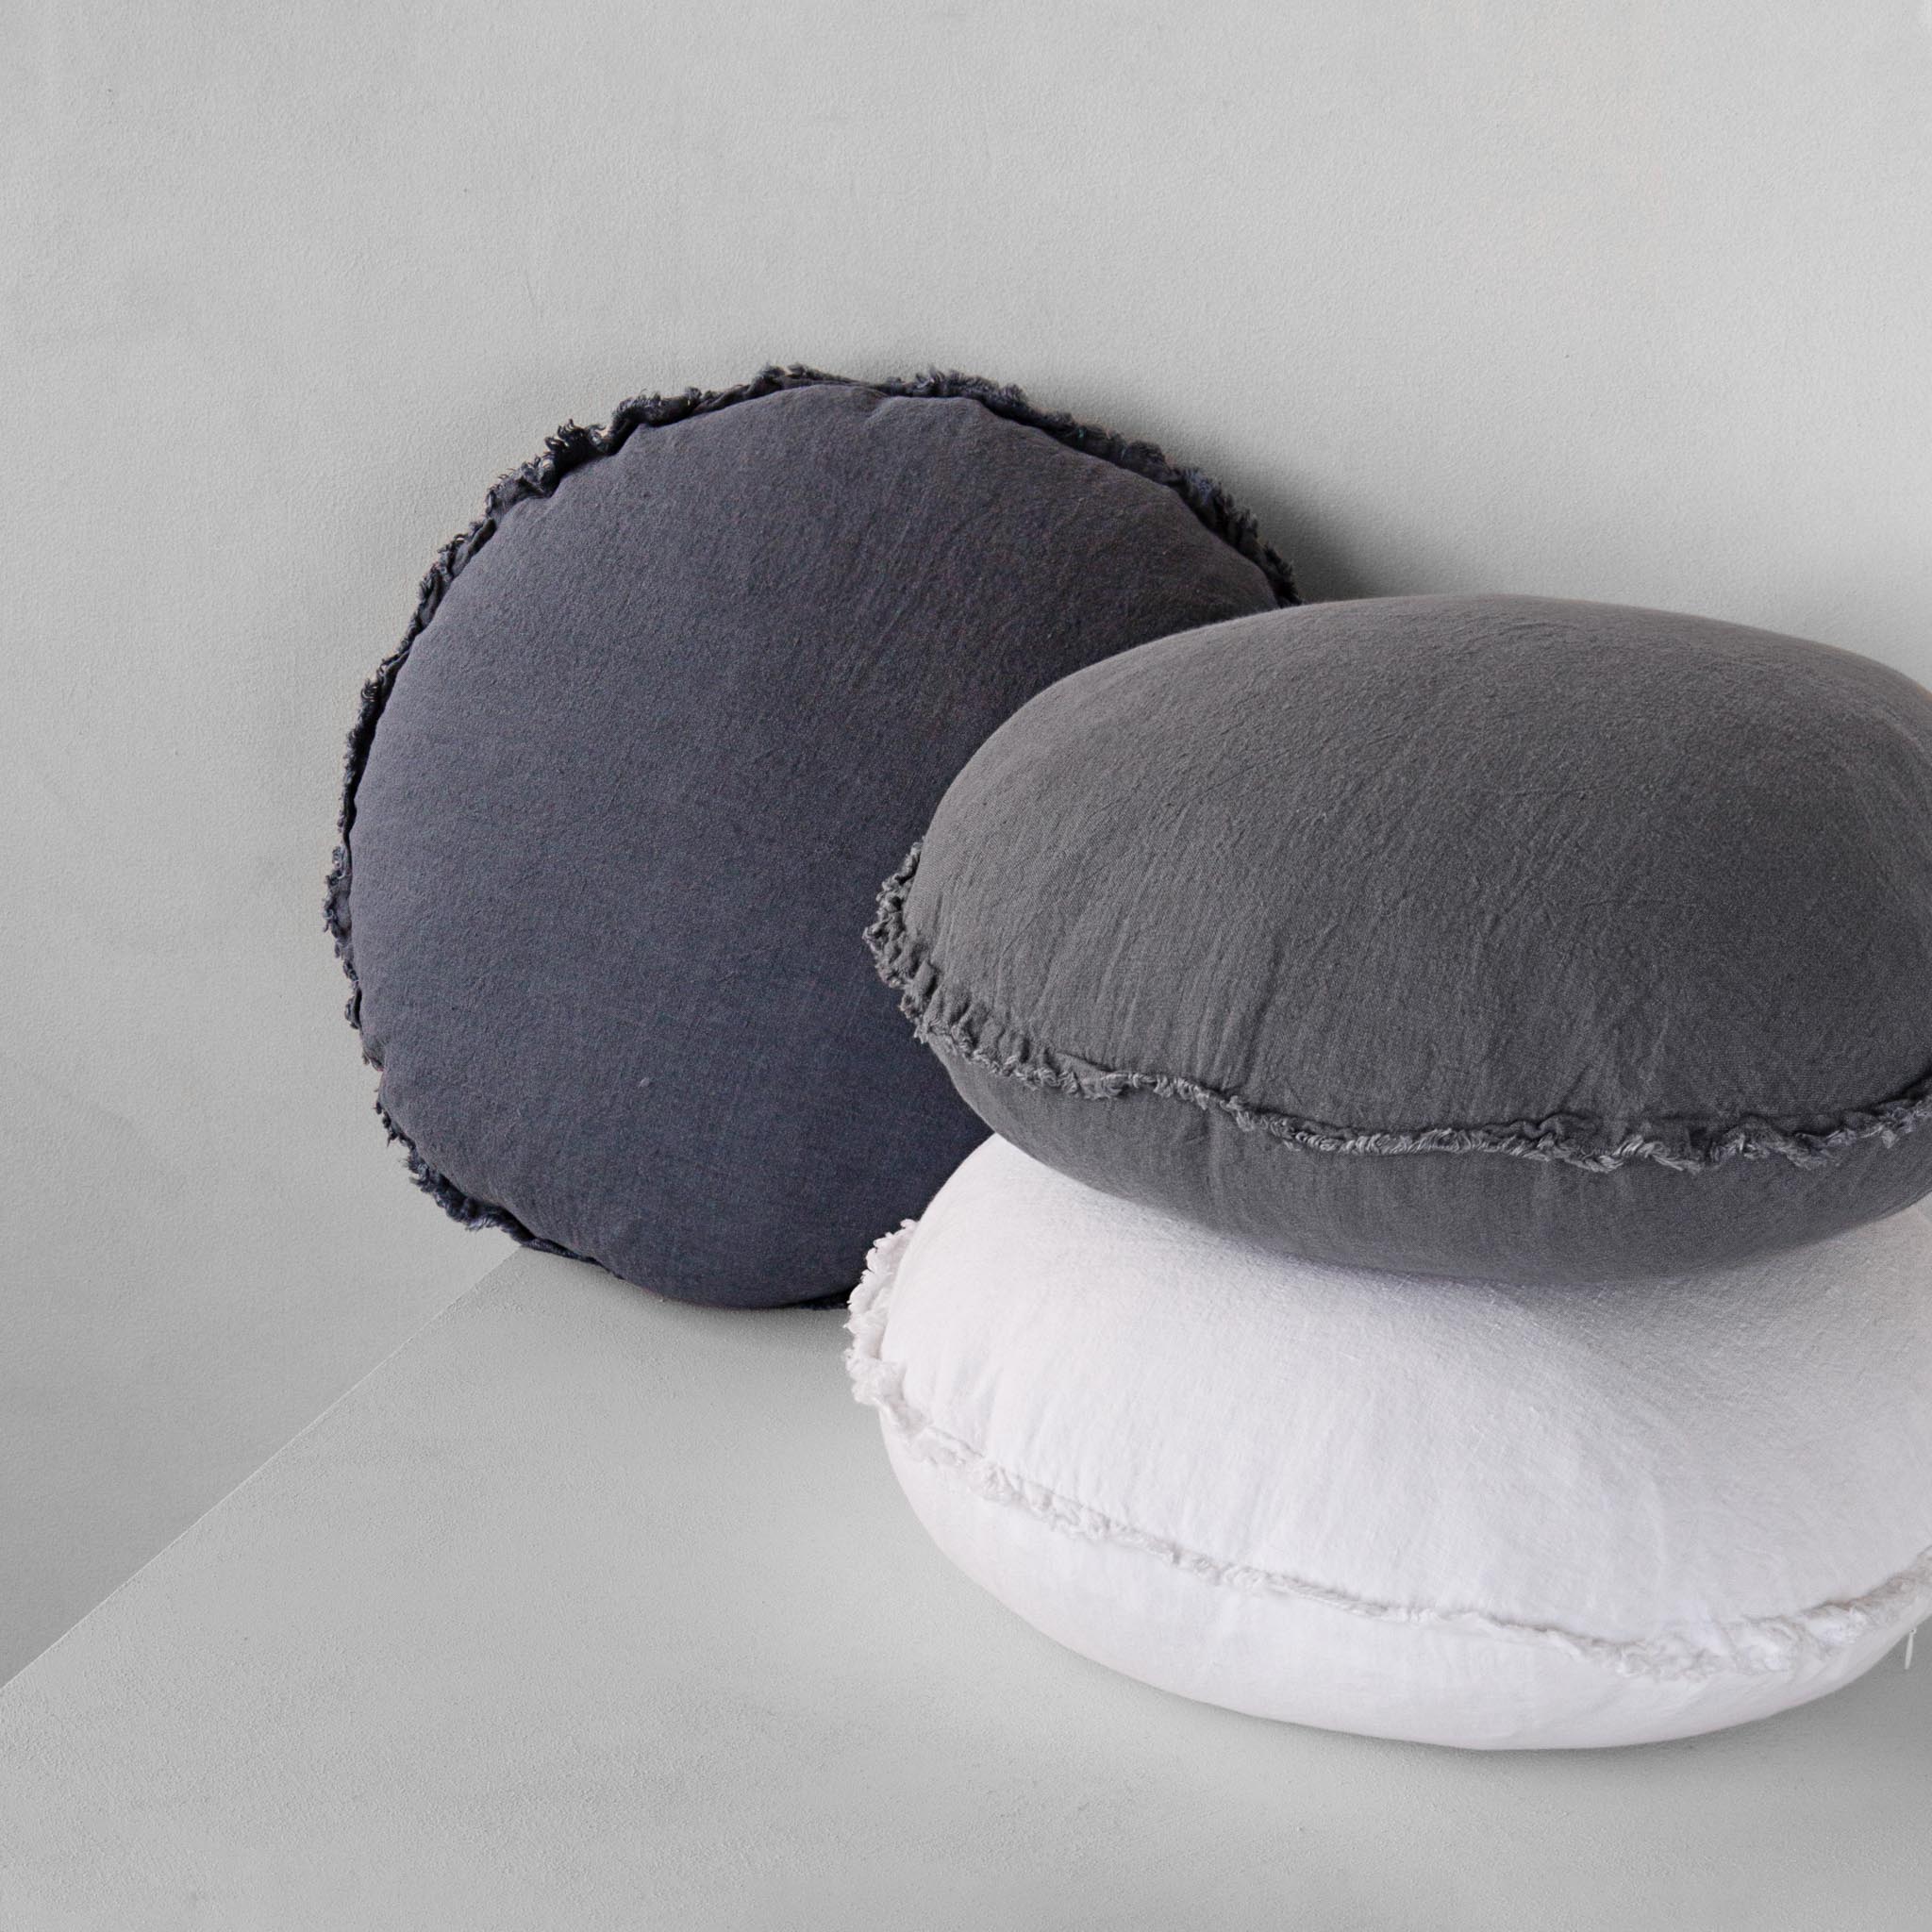 Round Linen Pillow | Charcoal Grey | Hale Mercantile Co.